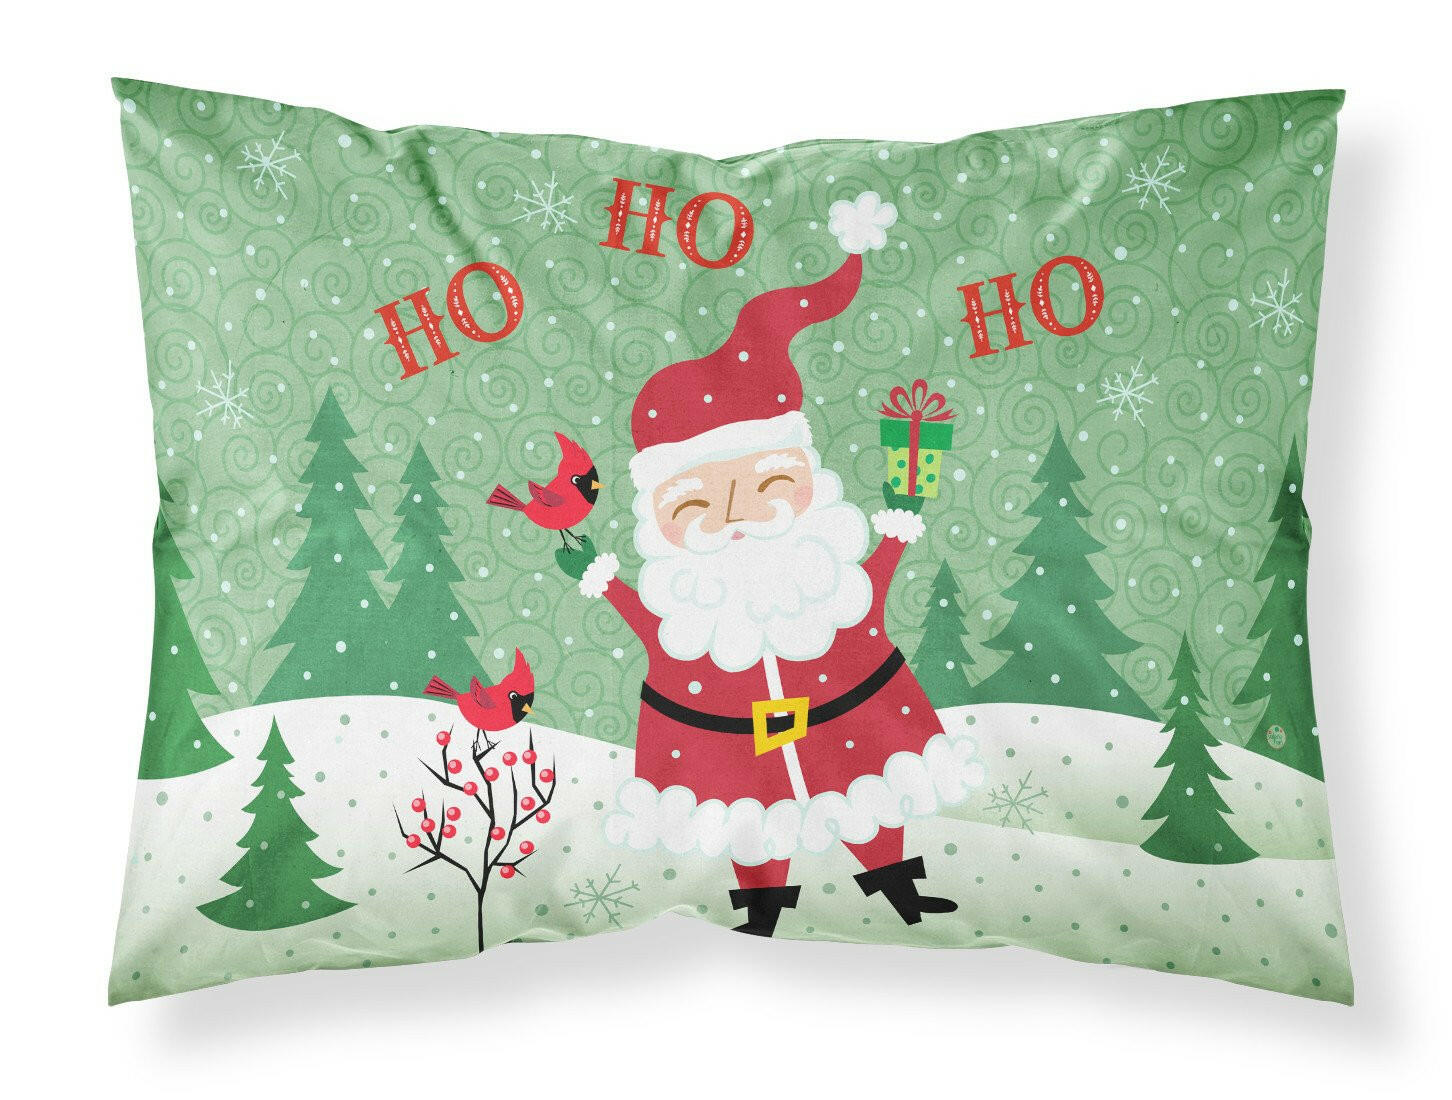 Merry Christmas Santa Claus Ho Ho Ho Fabric Standard Pillowcase VHA3016PILLOWCASE by Caroline's Treasures